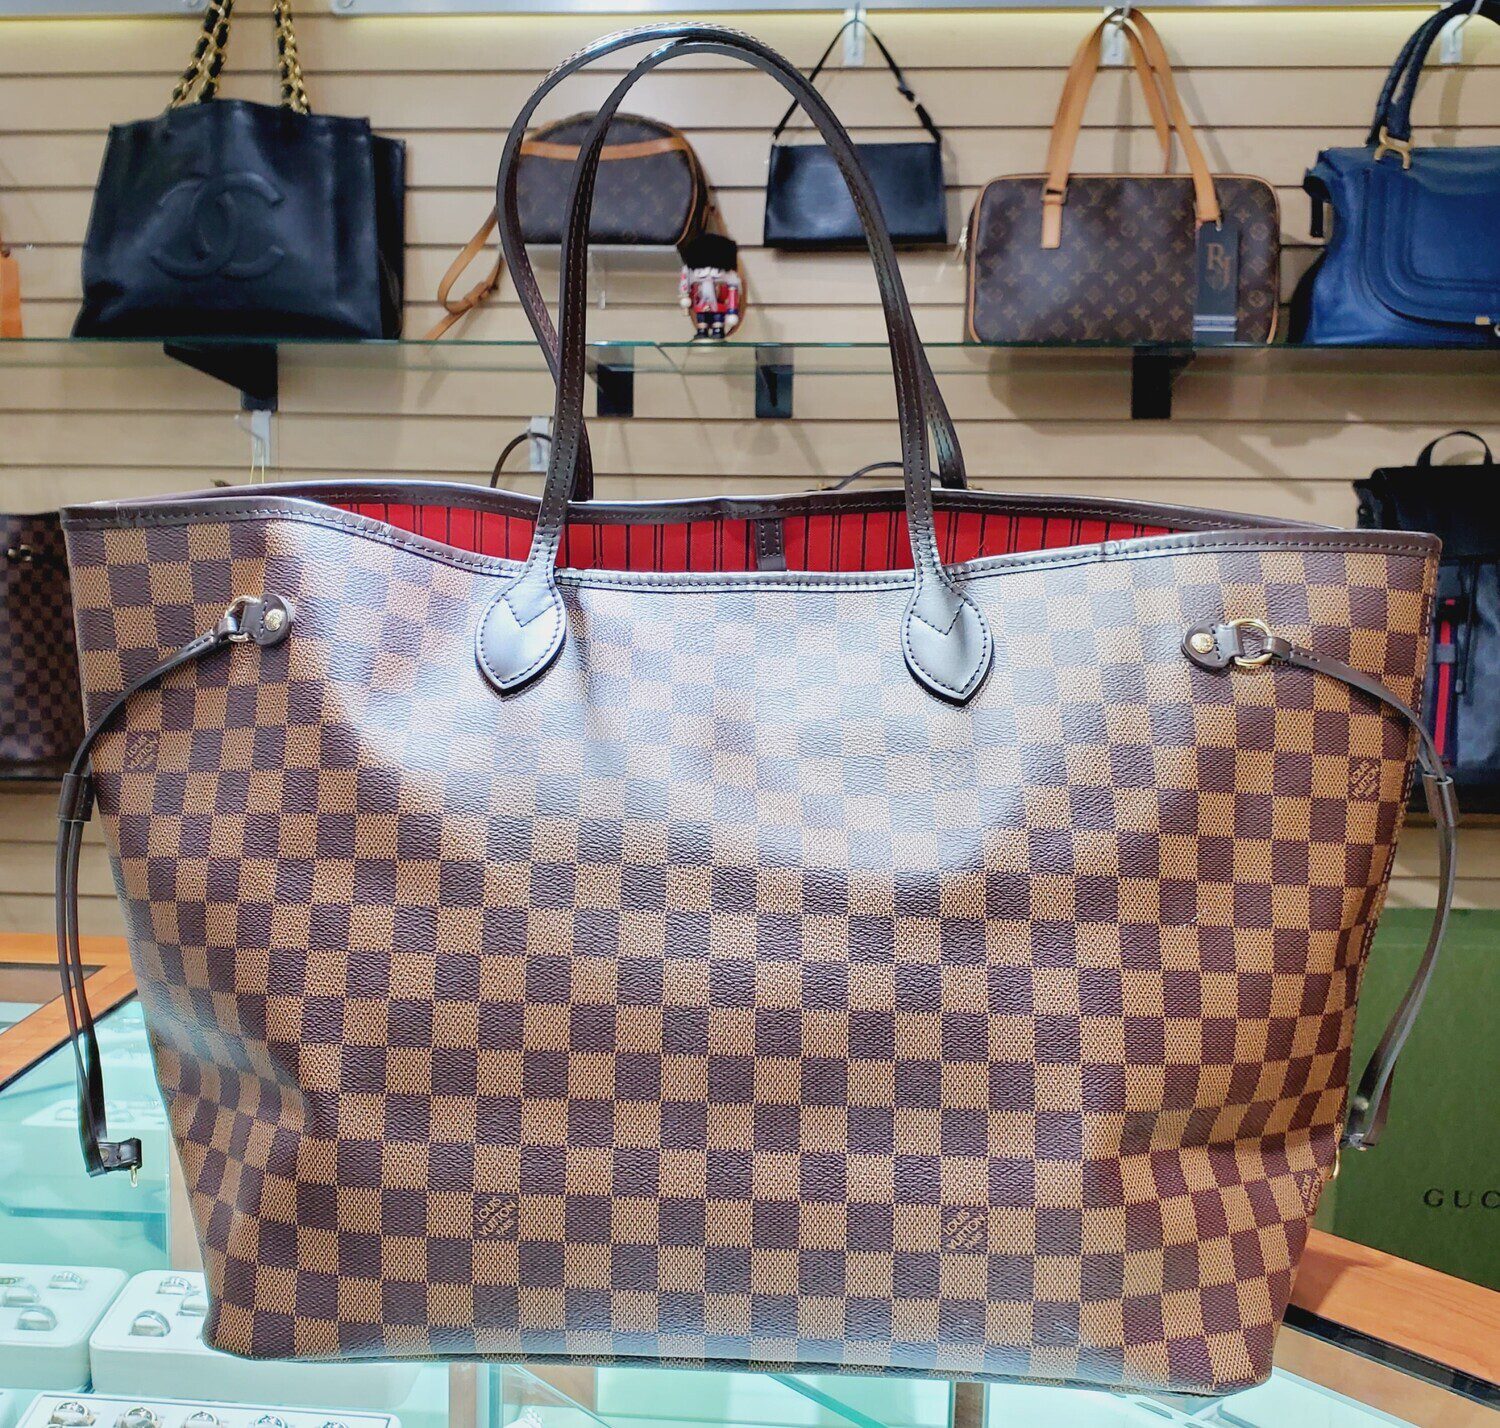 Inexpensive Handbags vs. Luxury Handbags